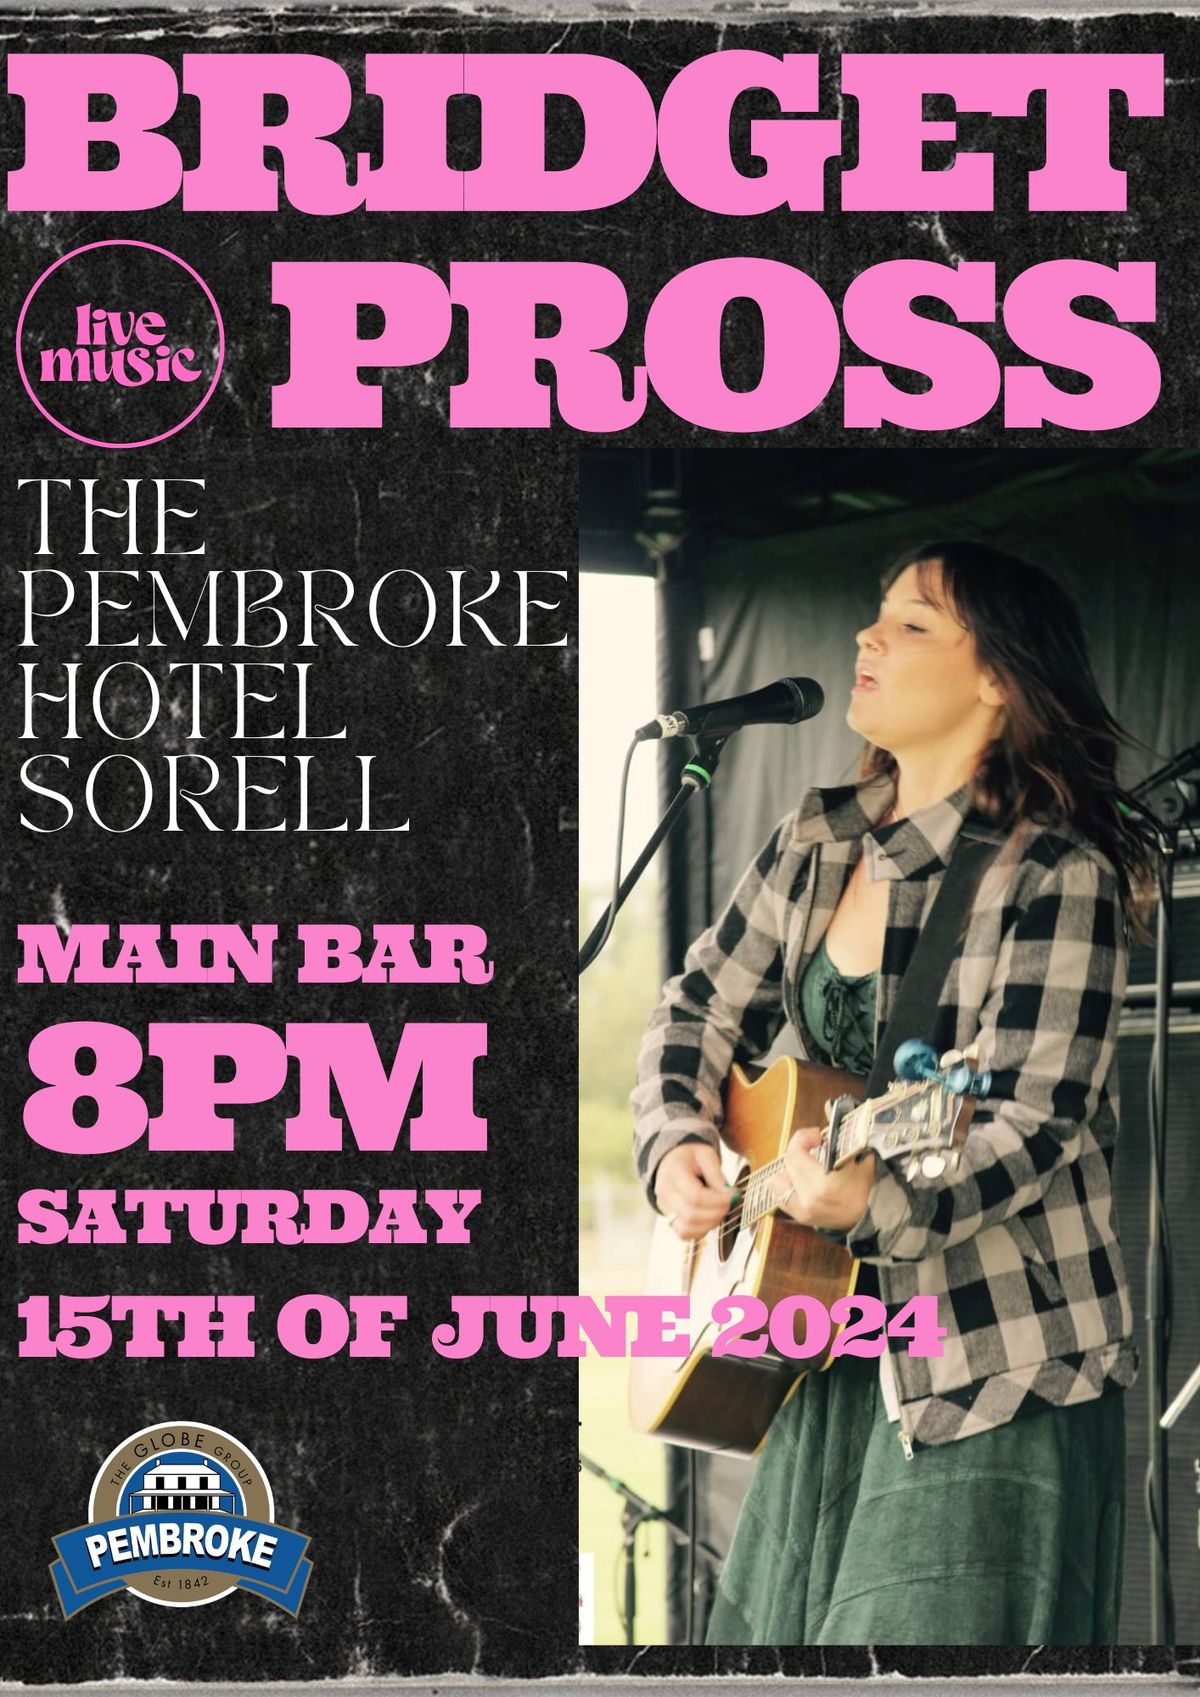 BRIDGET PROSS - The Pembroke Hotel Sorell